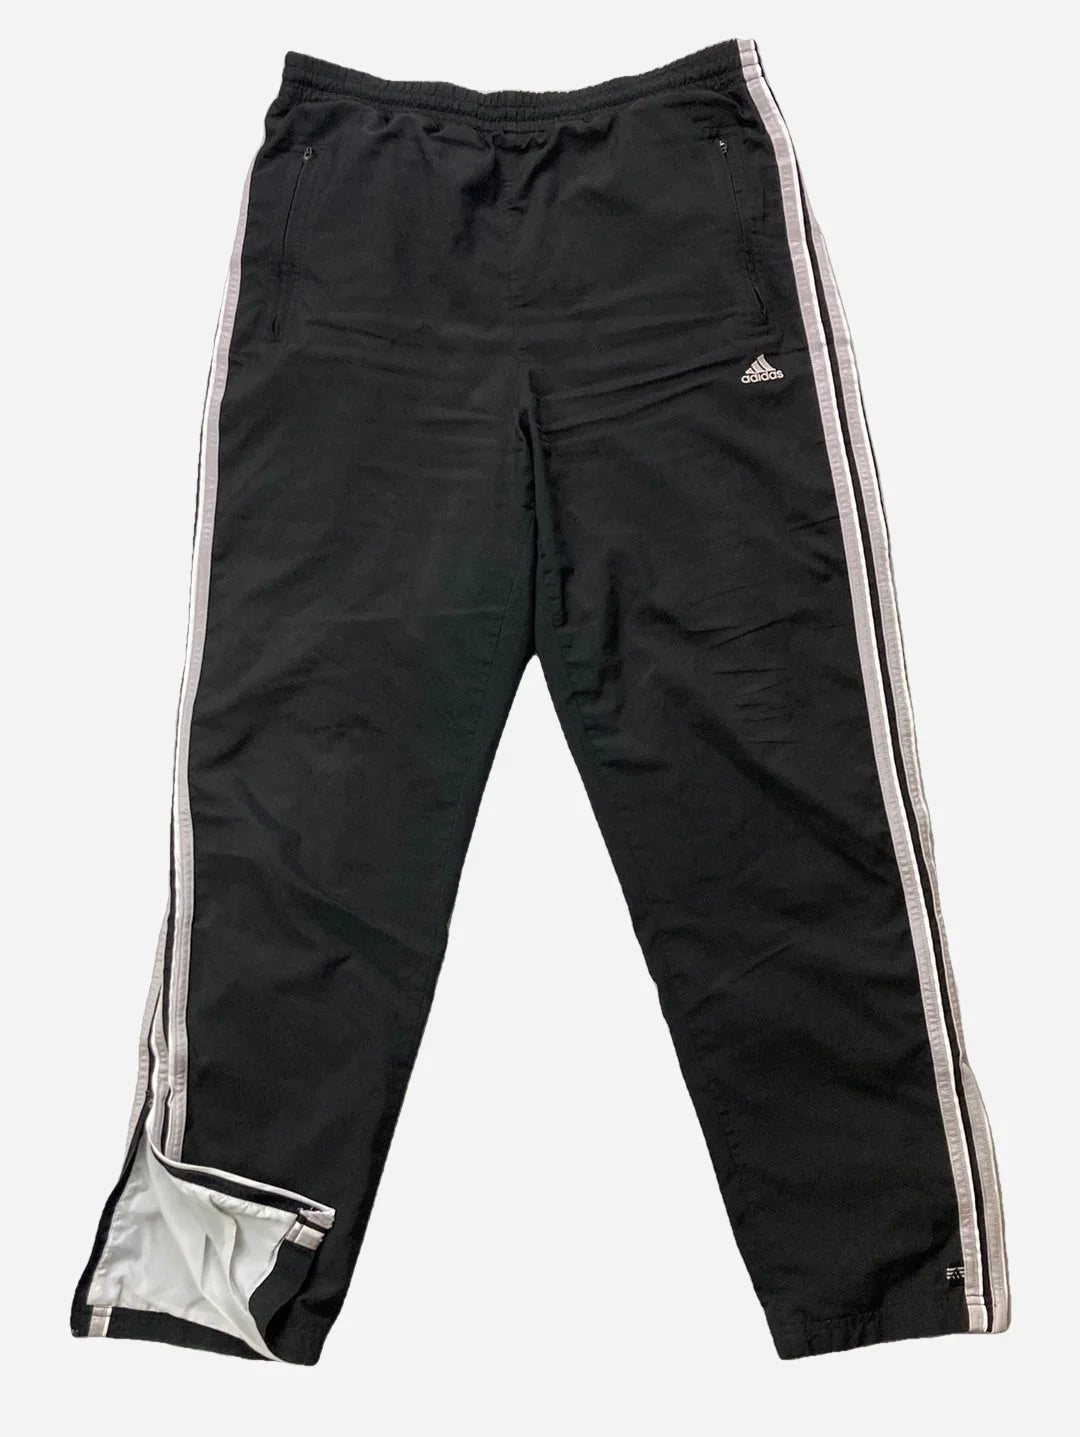 Adidas Track Pants (M)